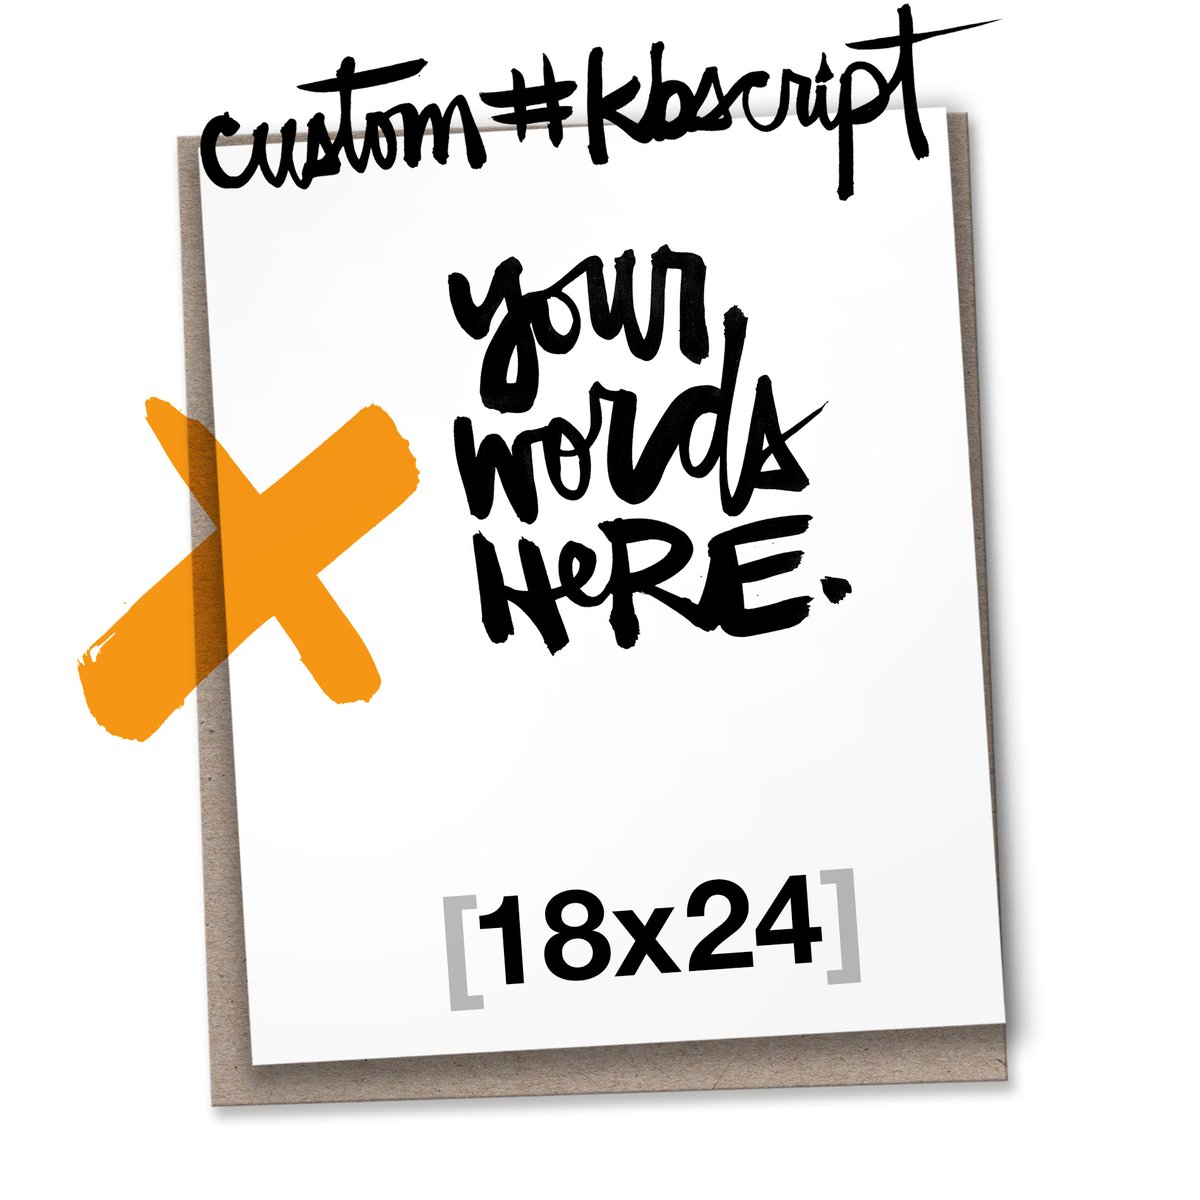 Image of CUSTOM #kbscript 18x24